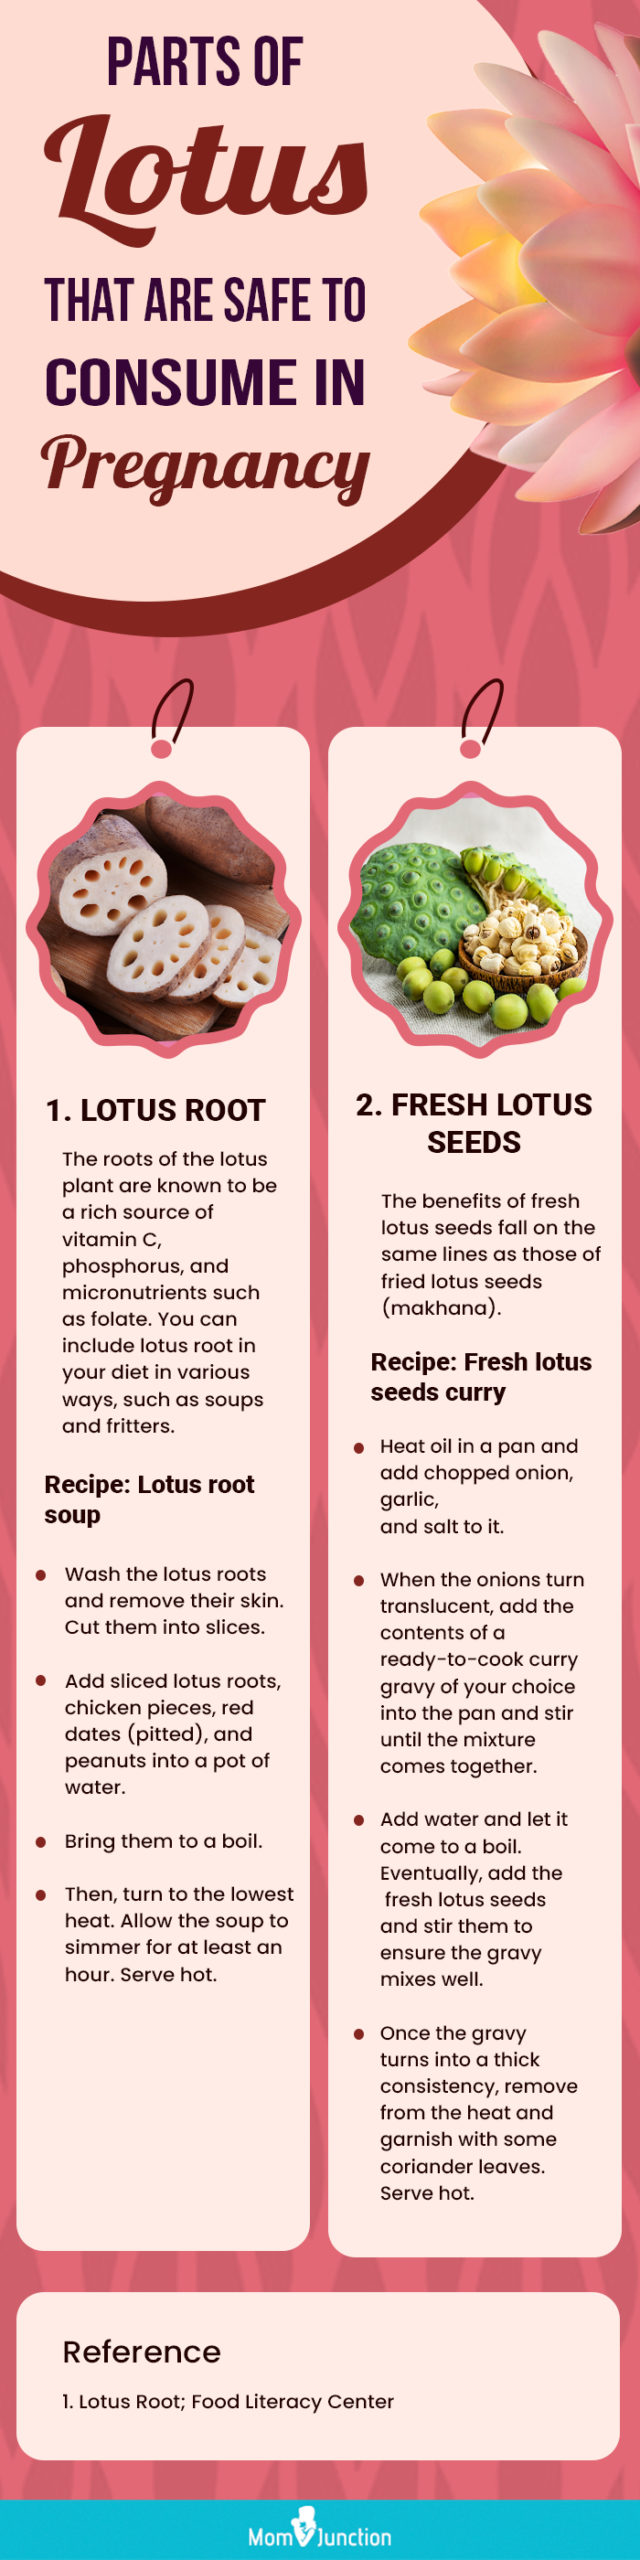 lotus during pregnancy [infographic]